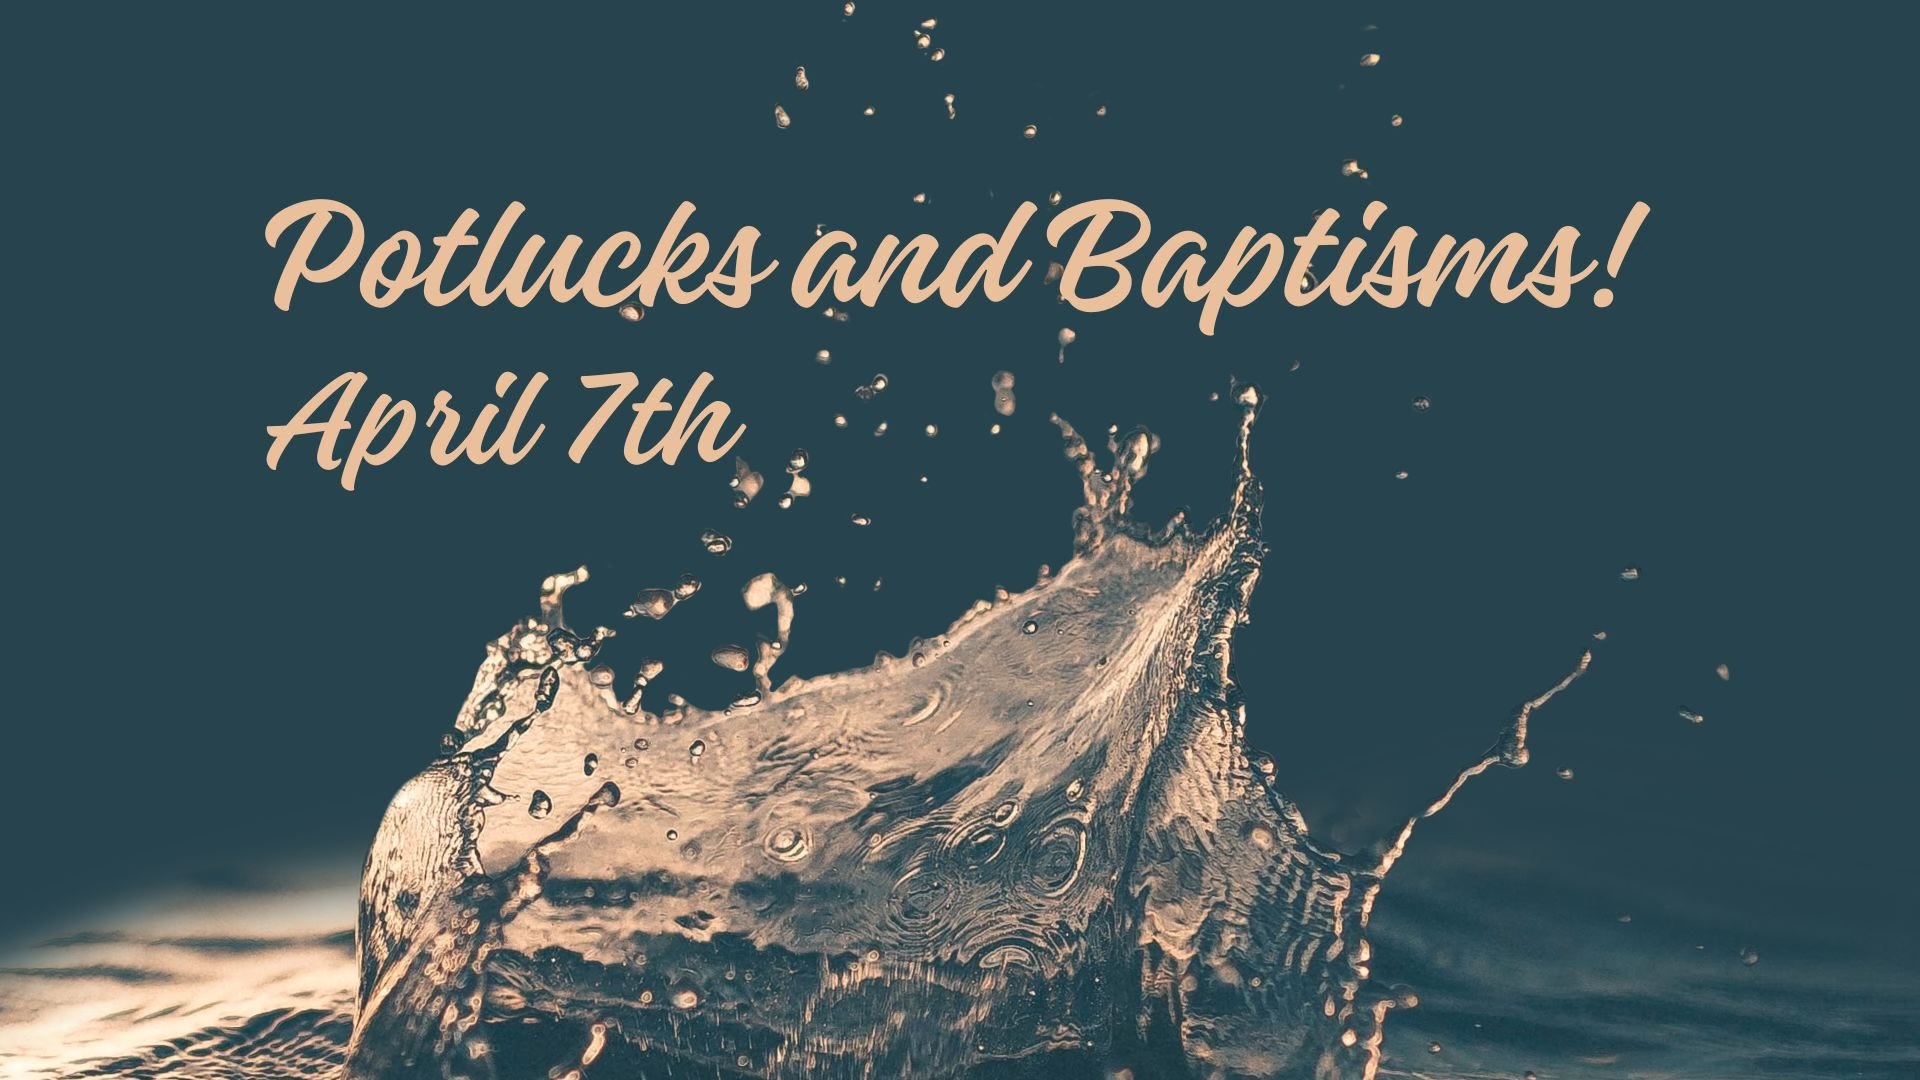 Potlucks and Baptism April 7th